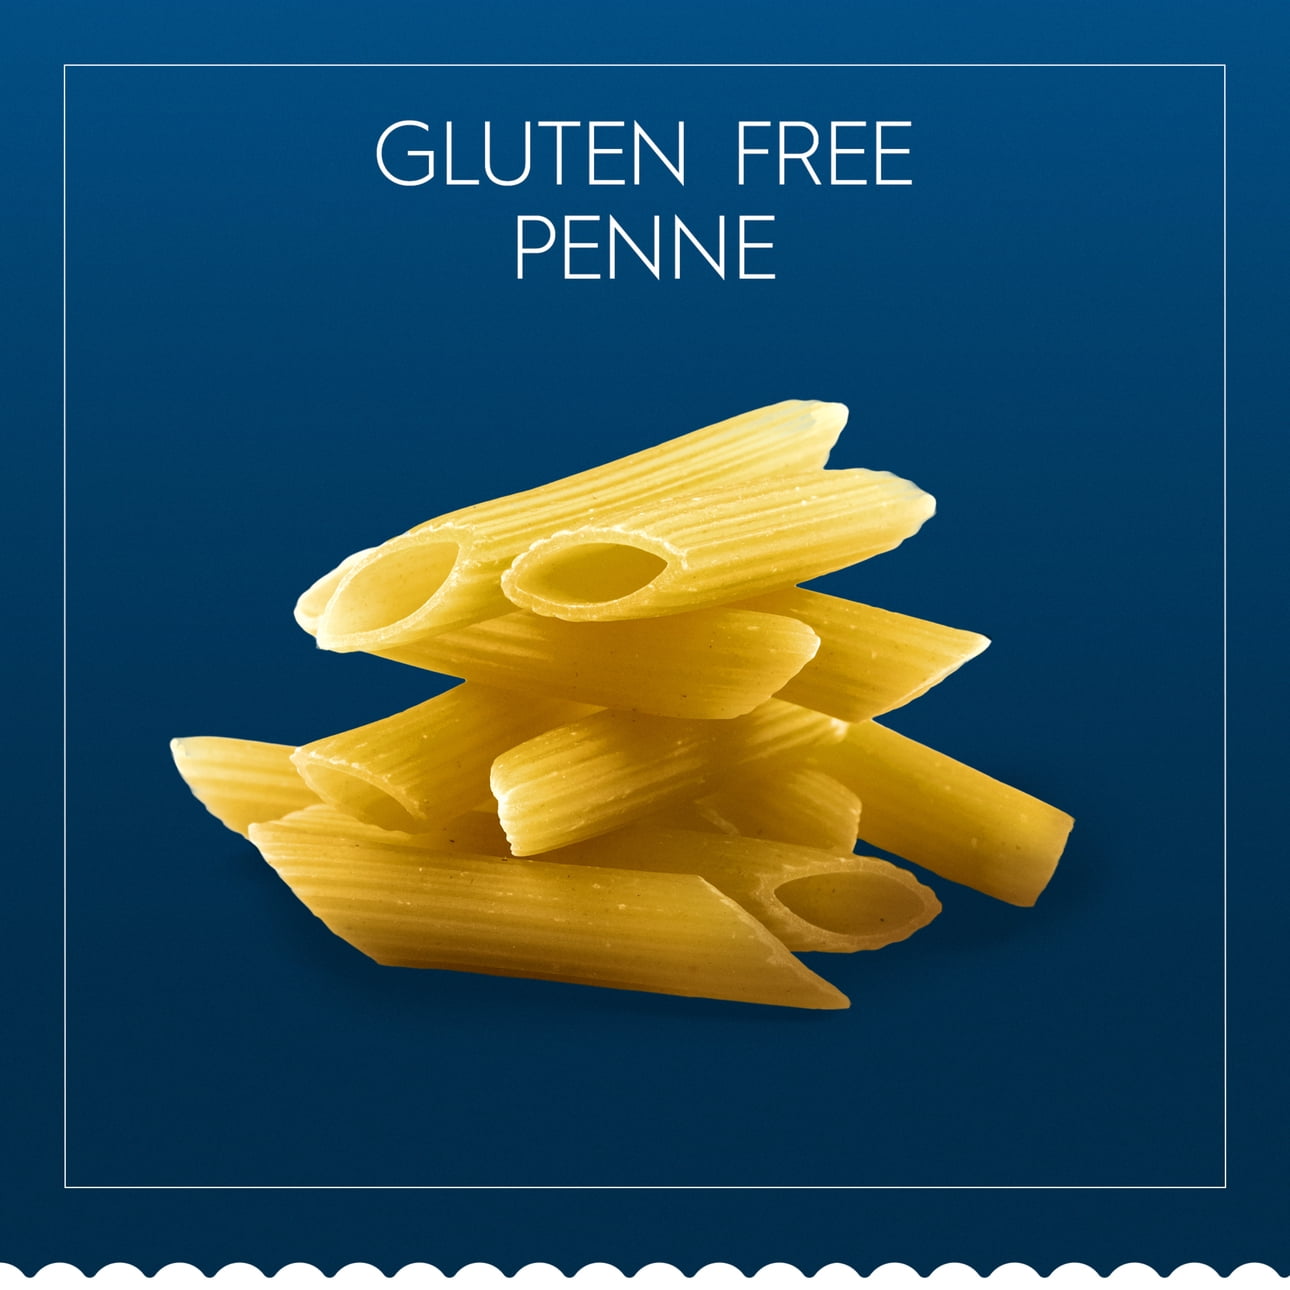 Barilla Gluten Free Penne Pasta, 12 oz